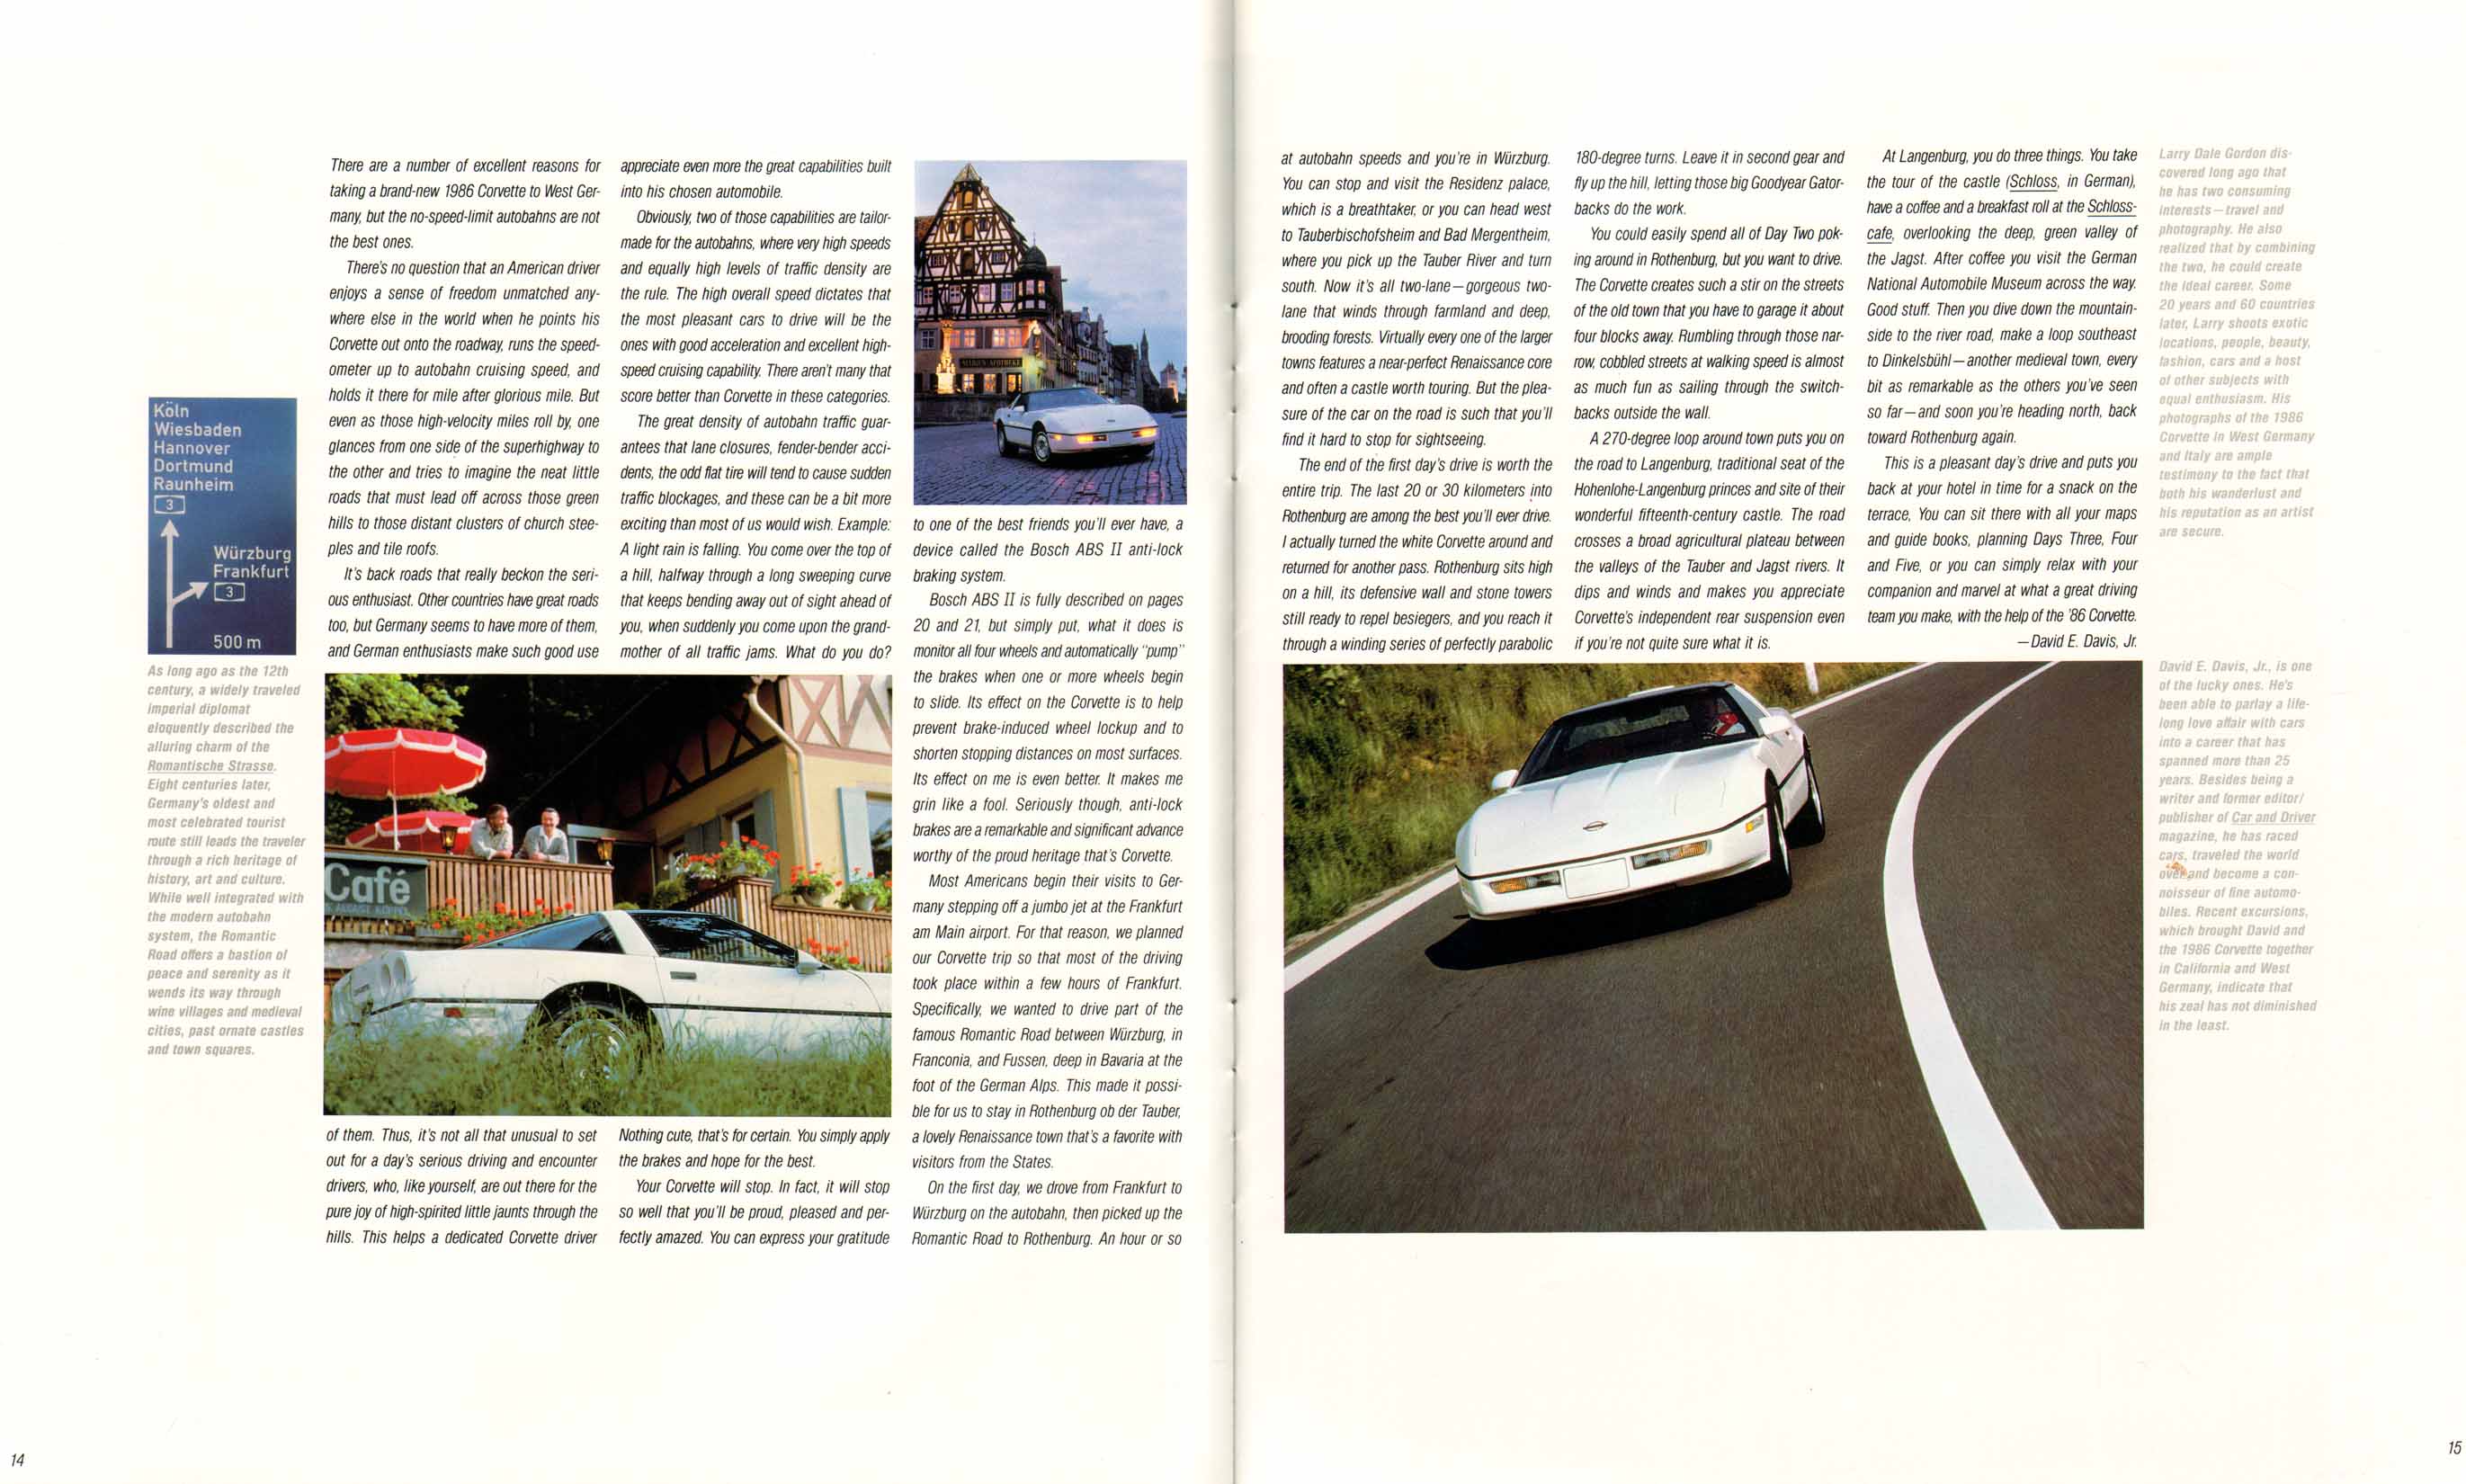 1986_Chevrolet_Corvette_Prestige-14-15